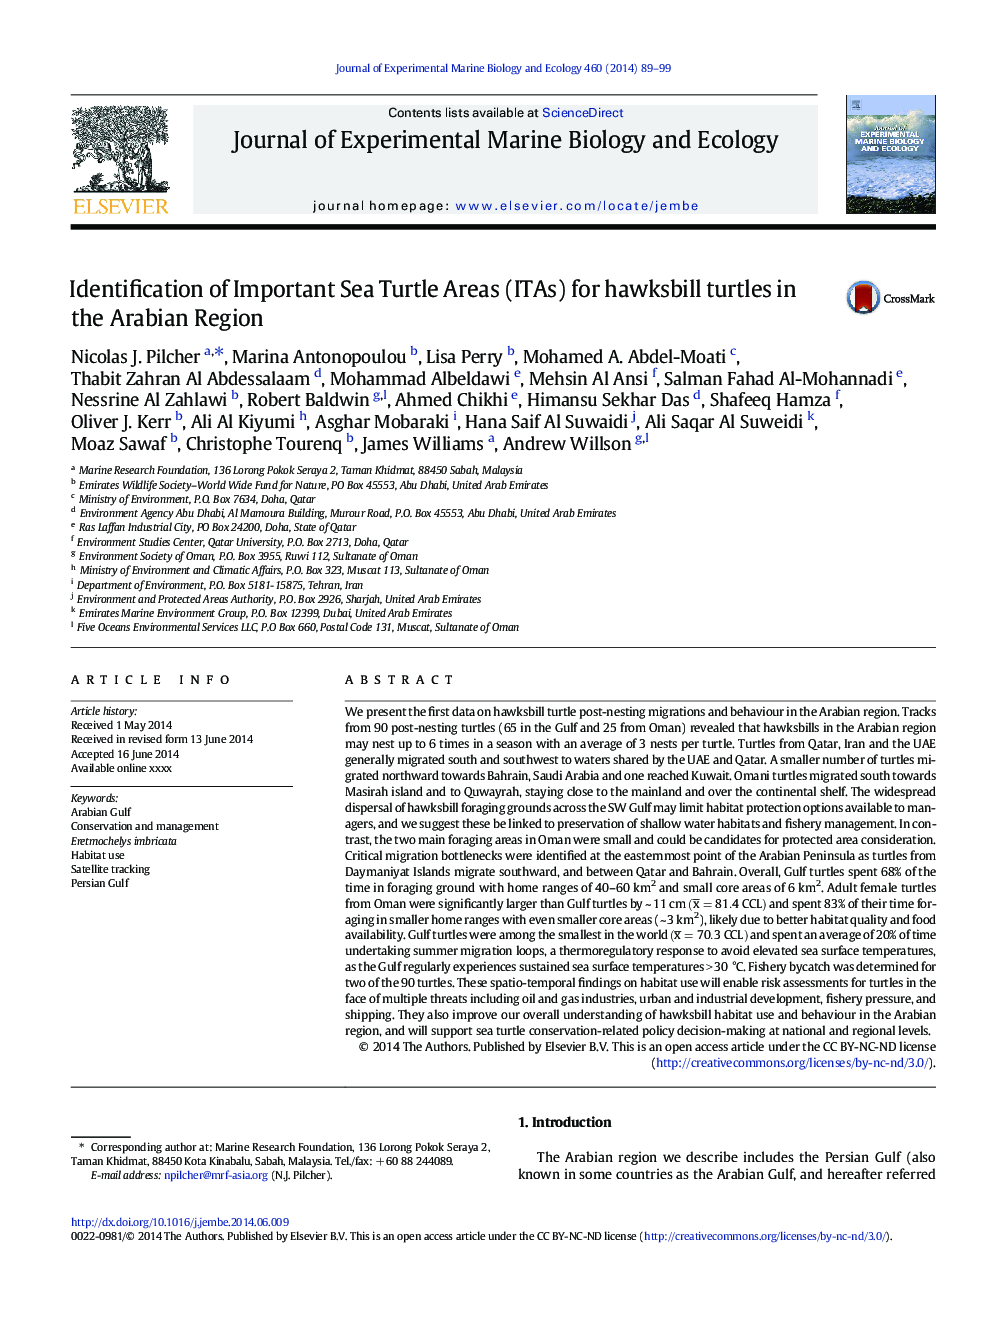 Identification of Important Sea Turtle Areas (ITAs) for hawksbill turtles in the Arabian Region